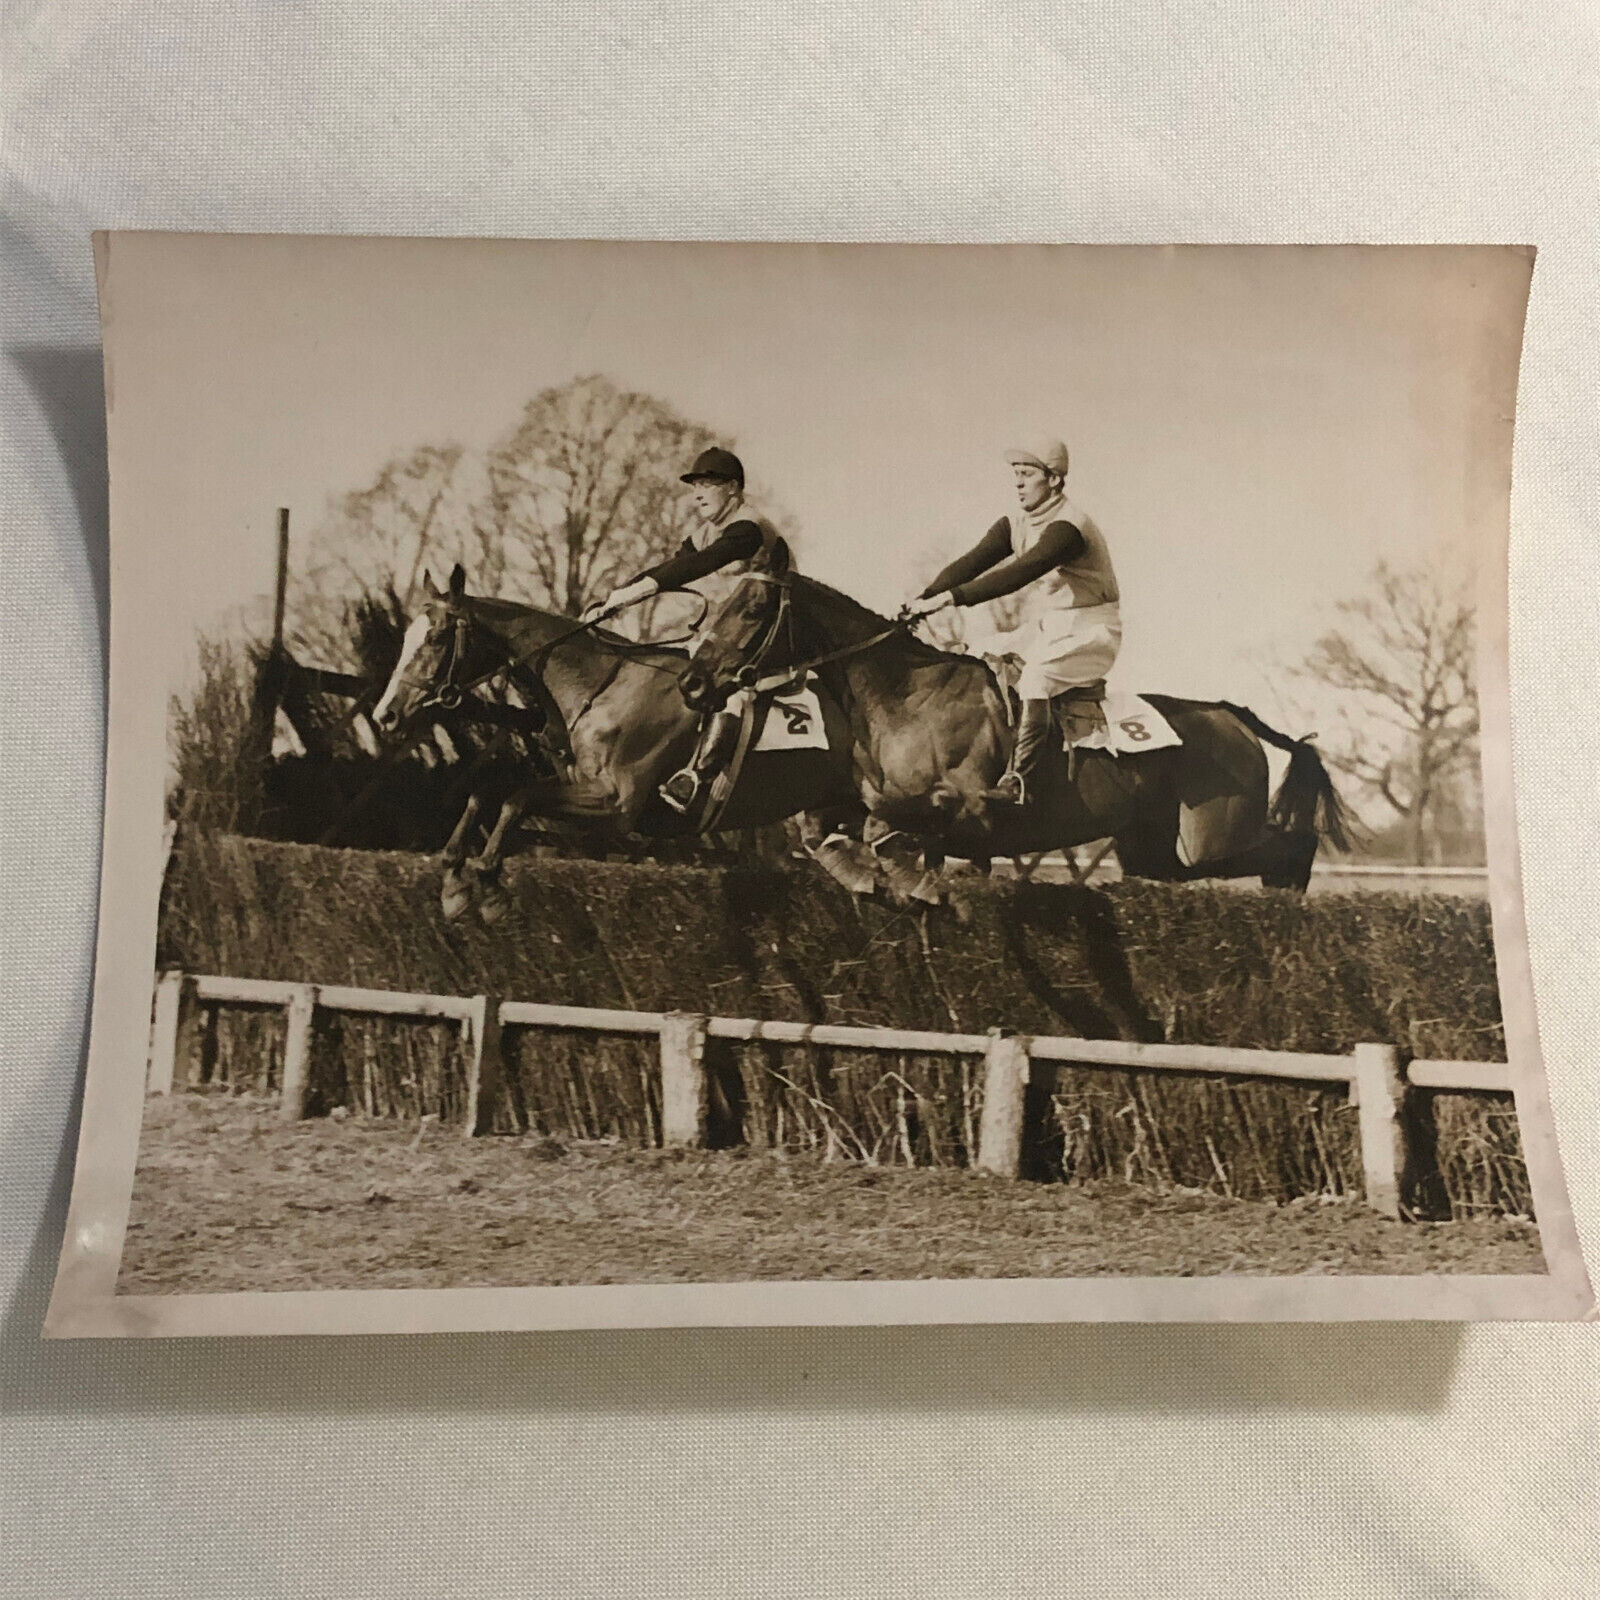 Press Photo Photograph Cambridge University Steeplechase Horse Race 1933 racing